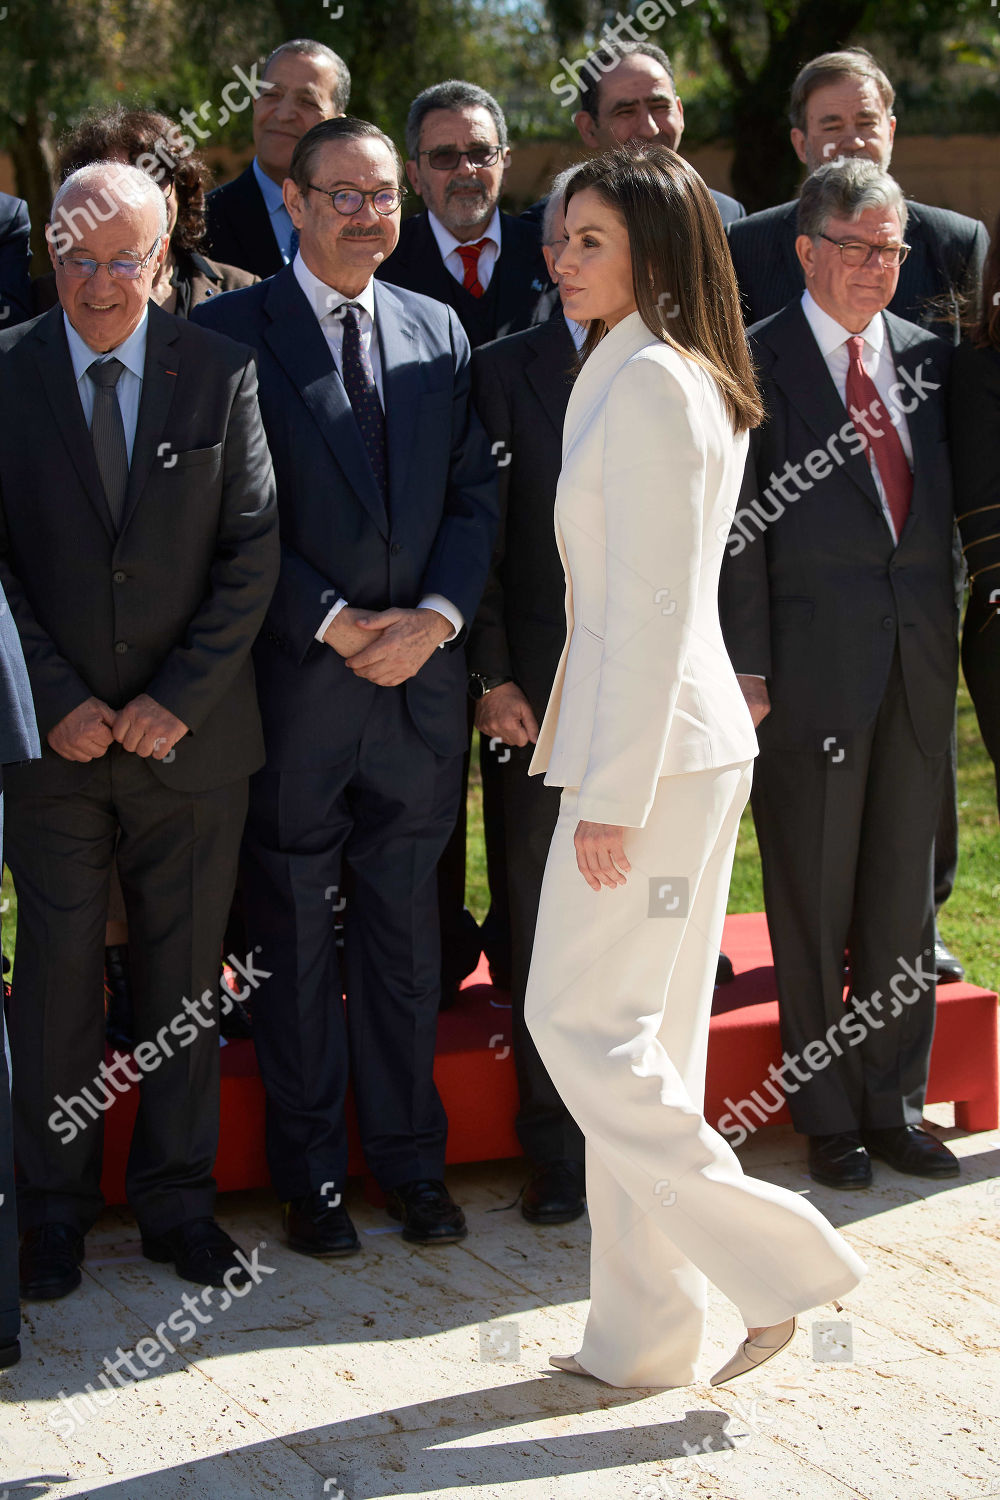 spanish-royals-visit-to-rabat-morocco-shutterstock-editorial-10105309ag.jpg